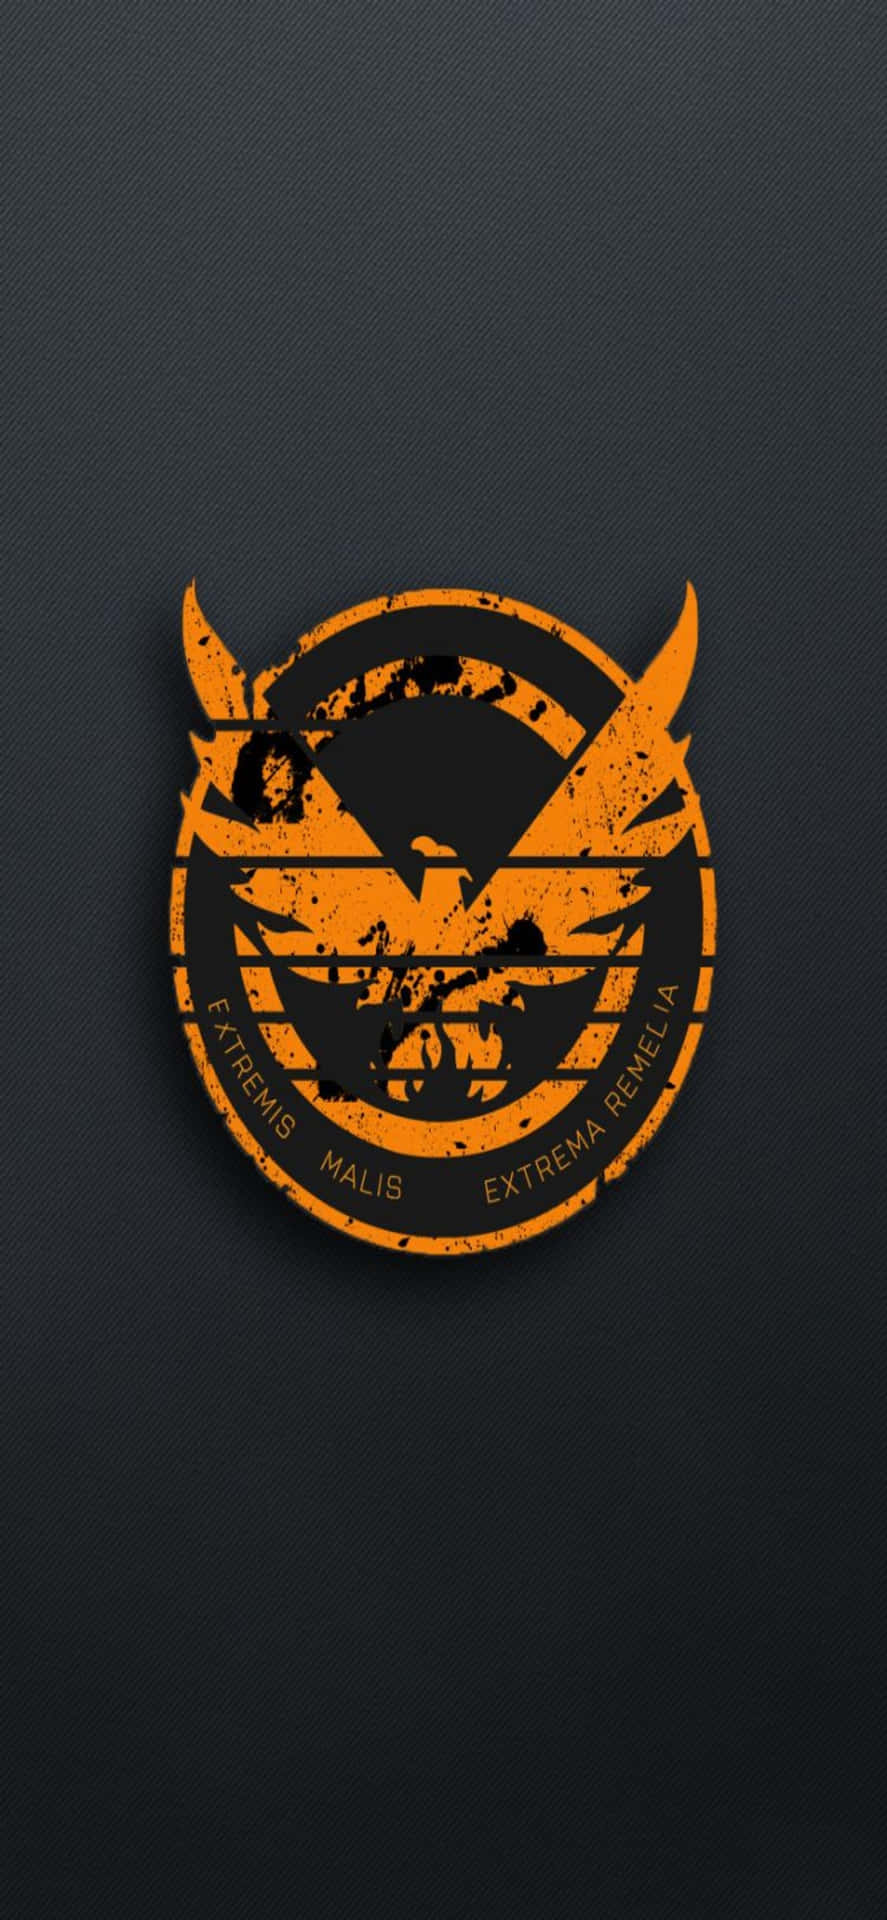 Iphonexs Bakgrundsbild Med Orange Phoenix-logotyp Från The Division.